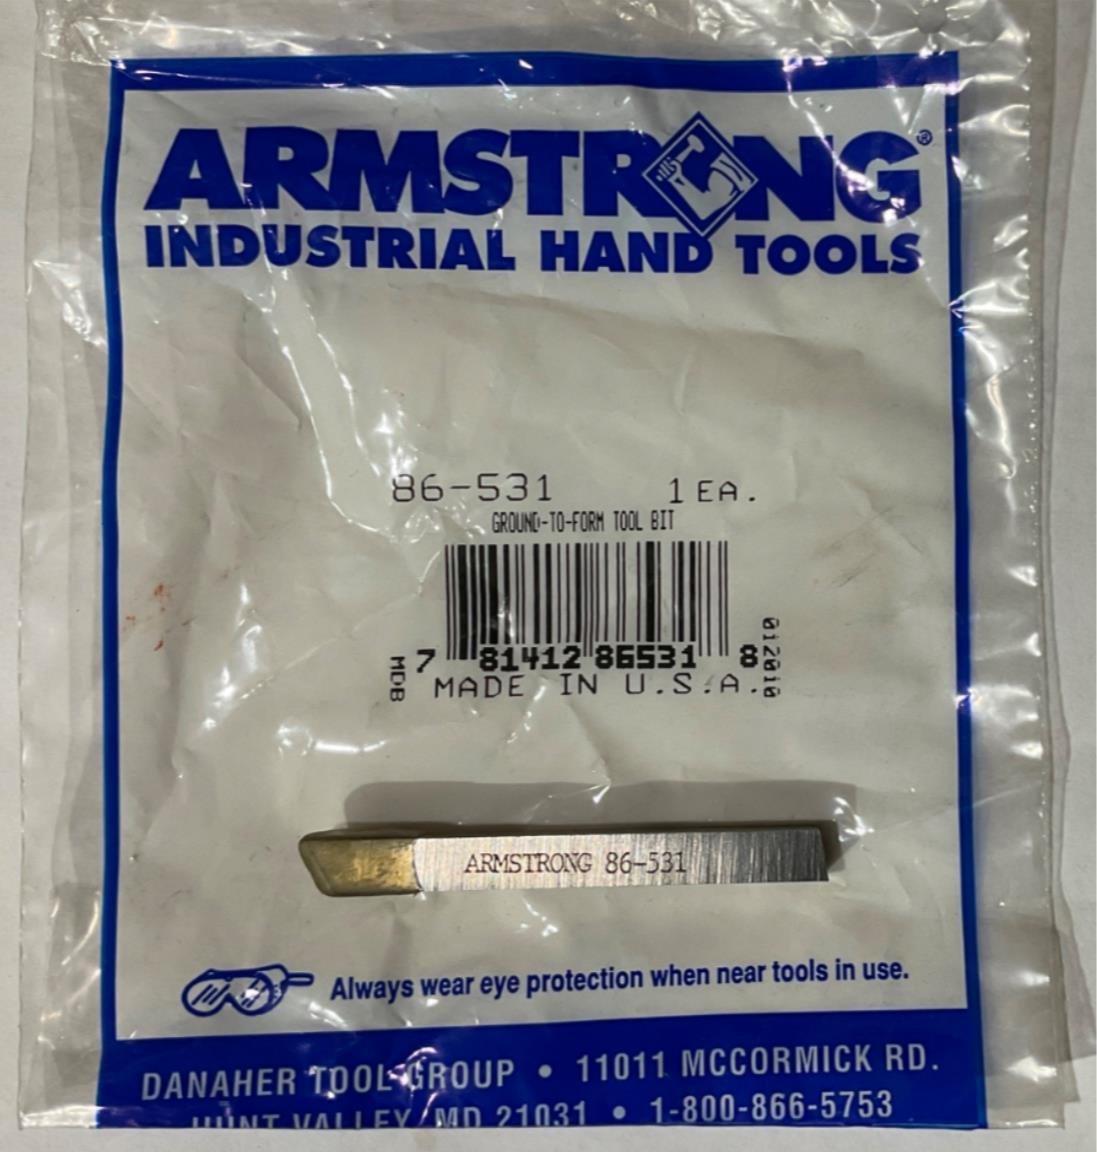 Armstrong 86-531 Ground-to-form Tool Bit USA